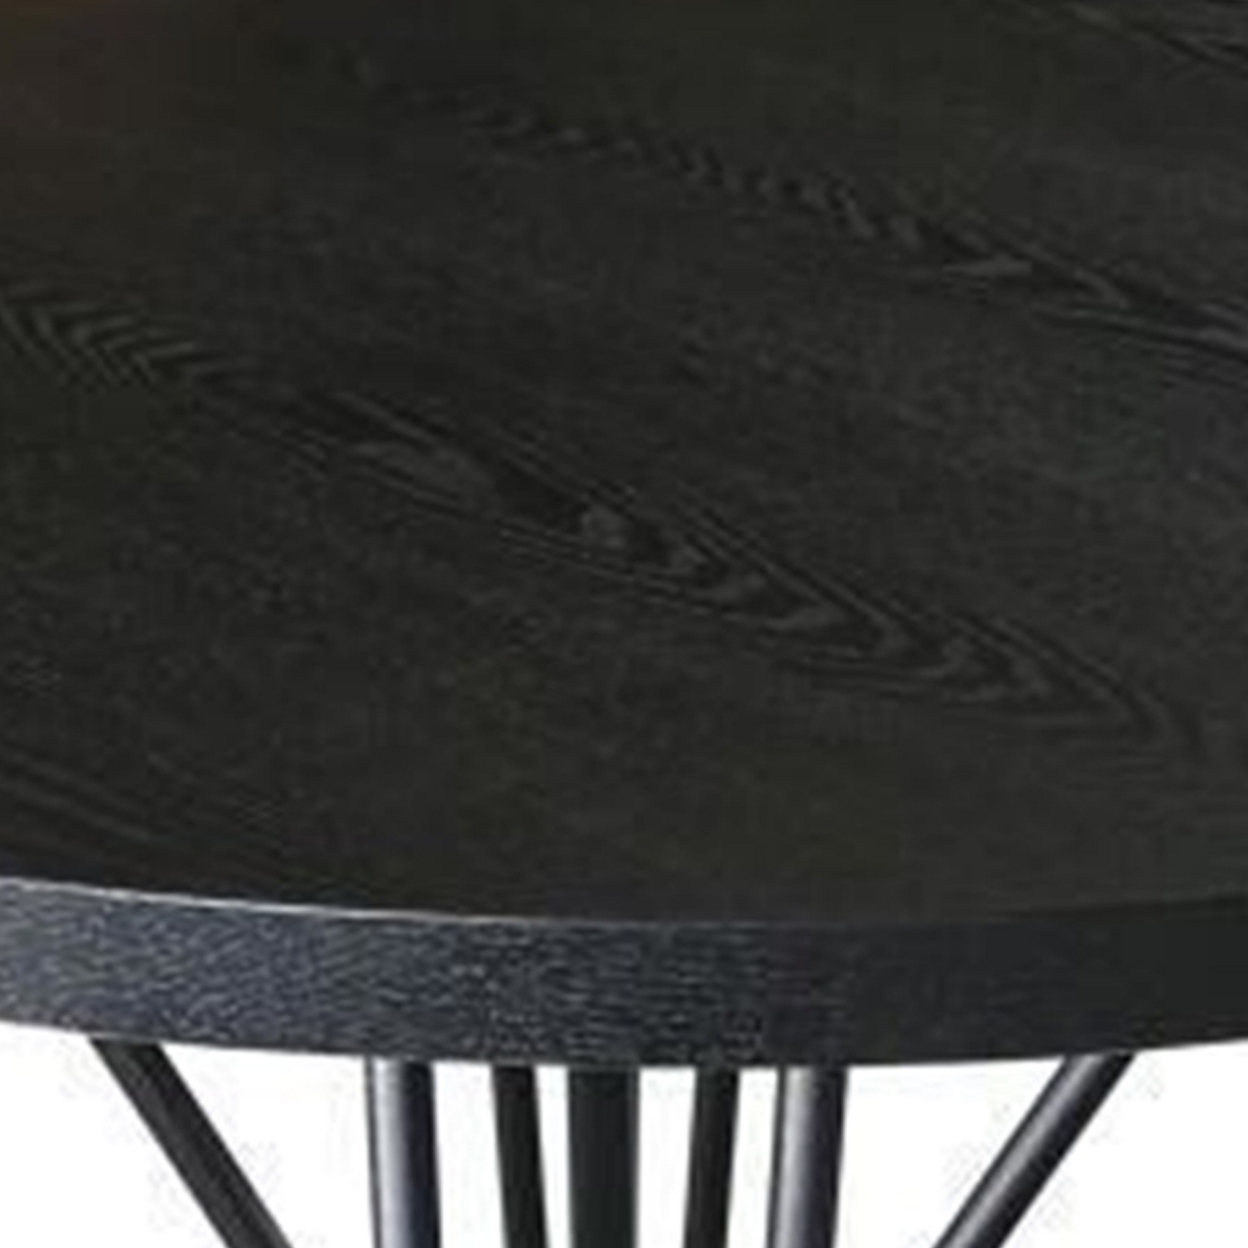 45 Inch Round Dining Table, Wood Grain Details, Butterfly Legs, Black - Saltoro Sherpi